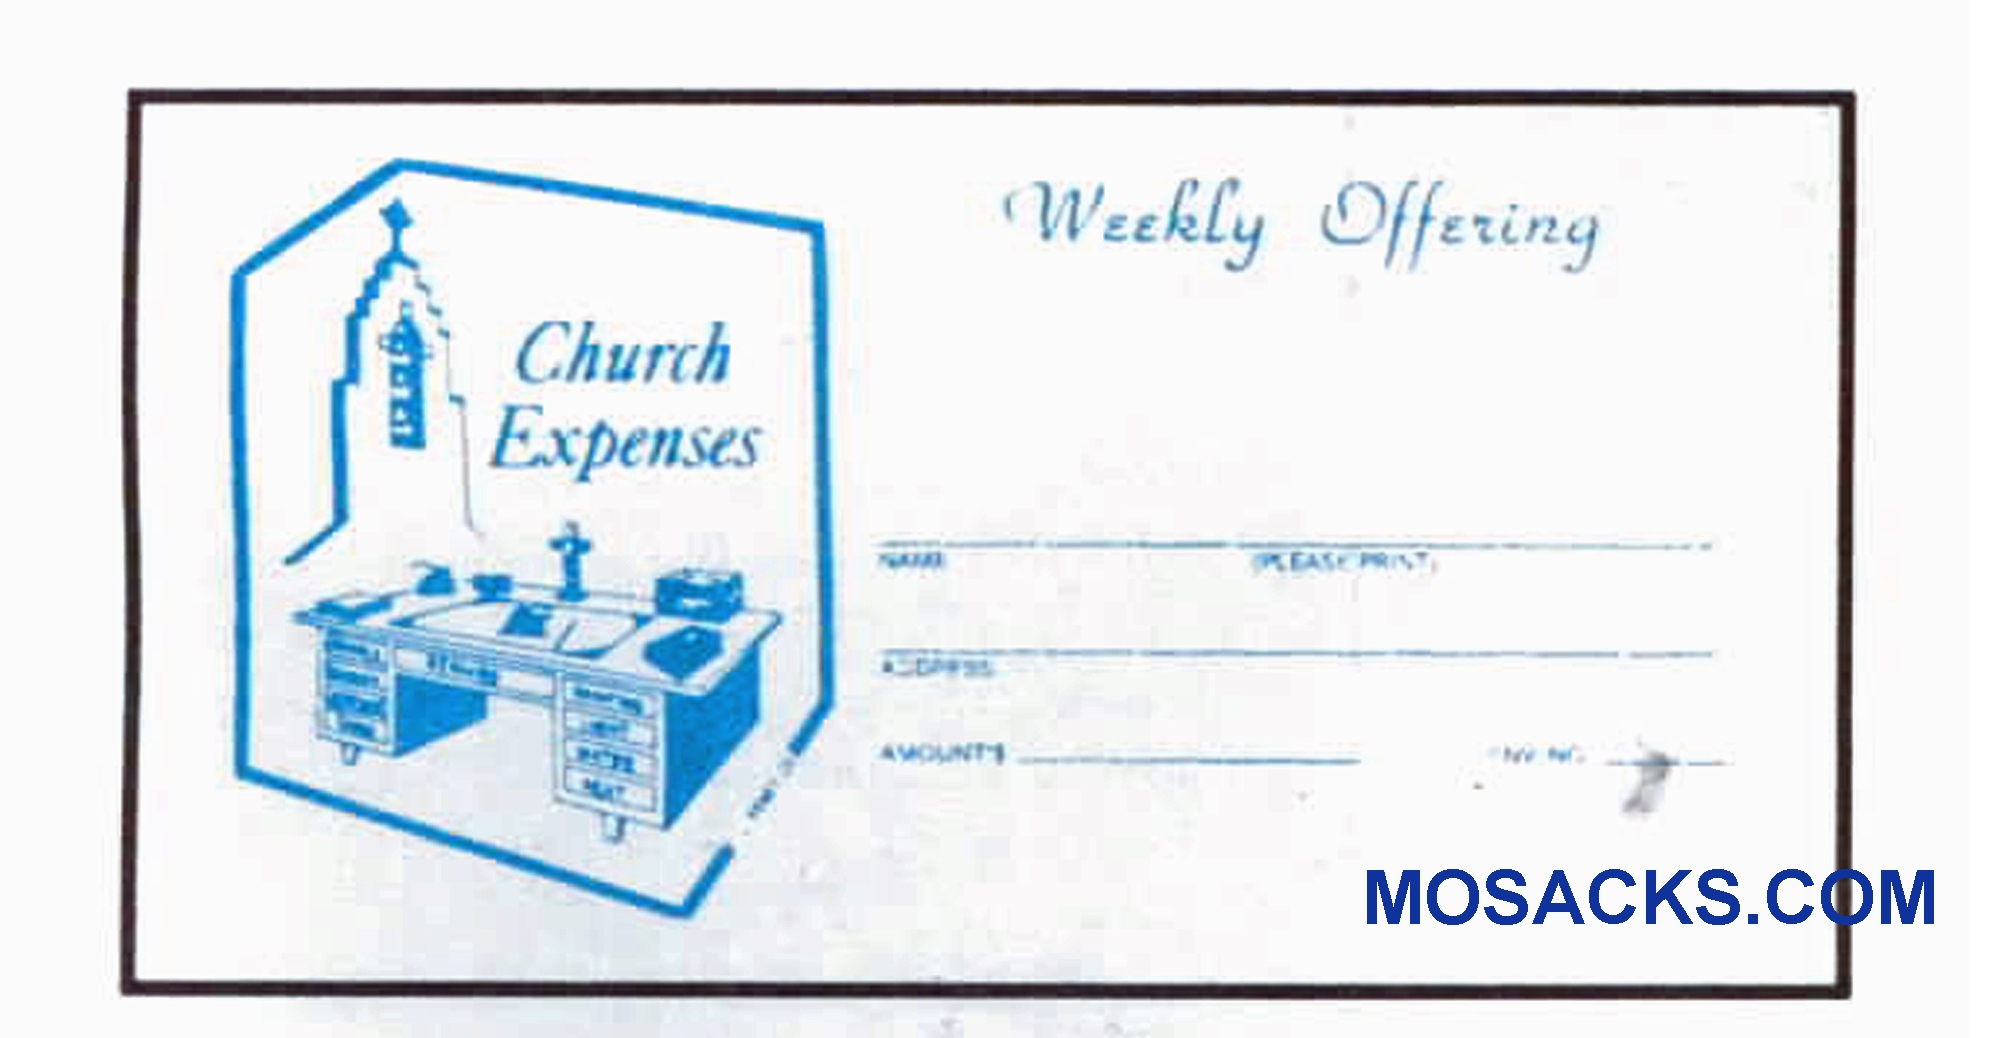 Weekly Offering Envelope - Church Offering Envelope 6-1/4 x 3-1/8 #304-387